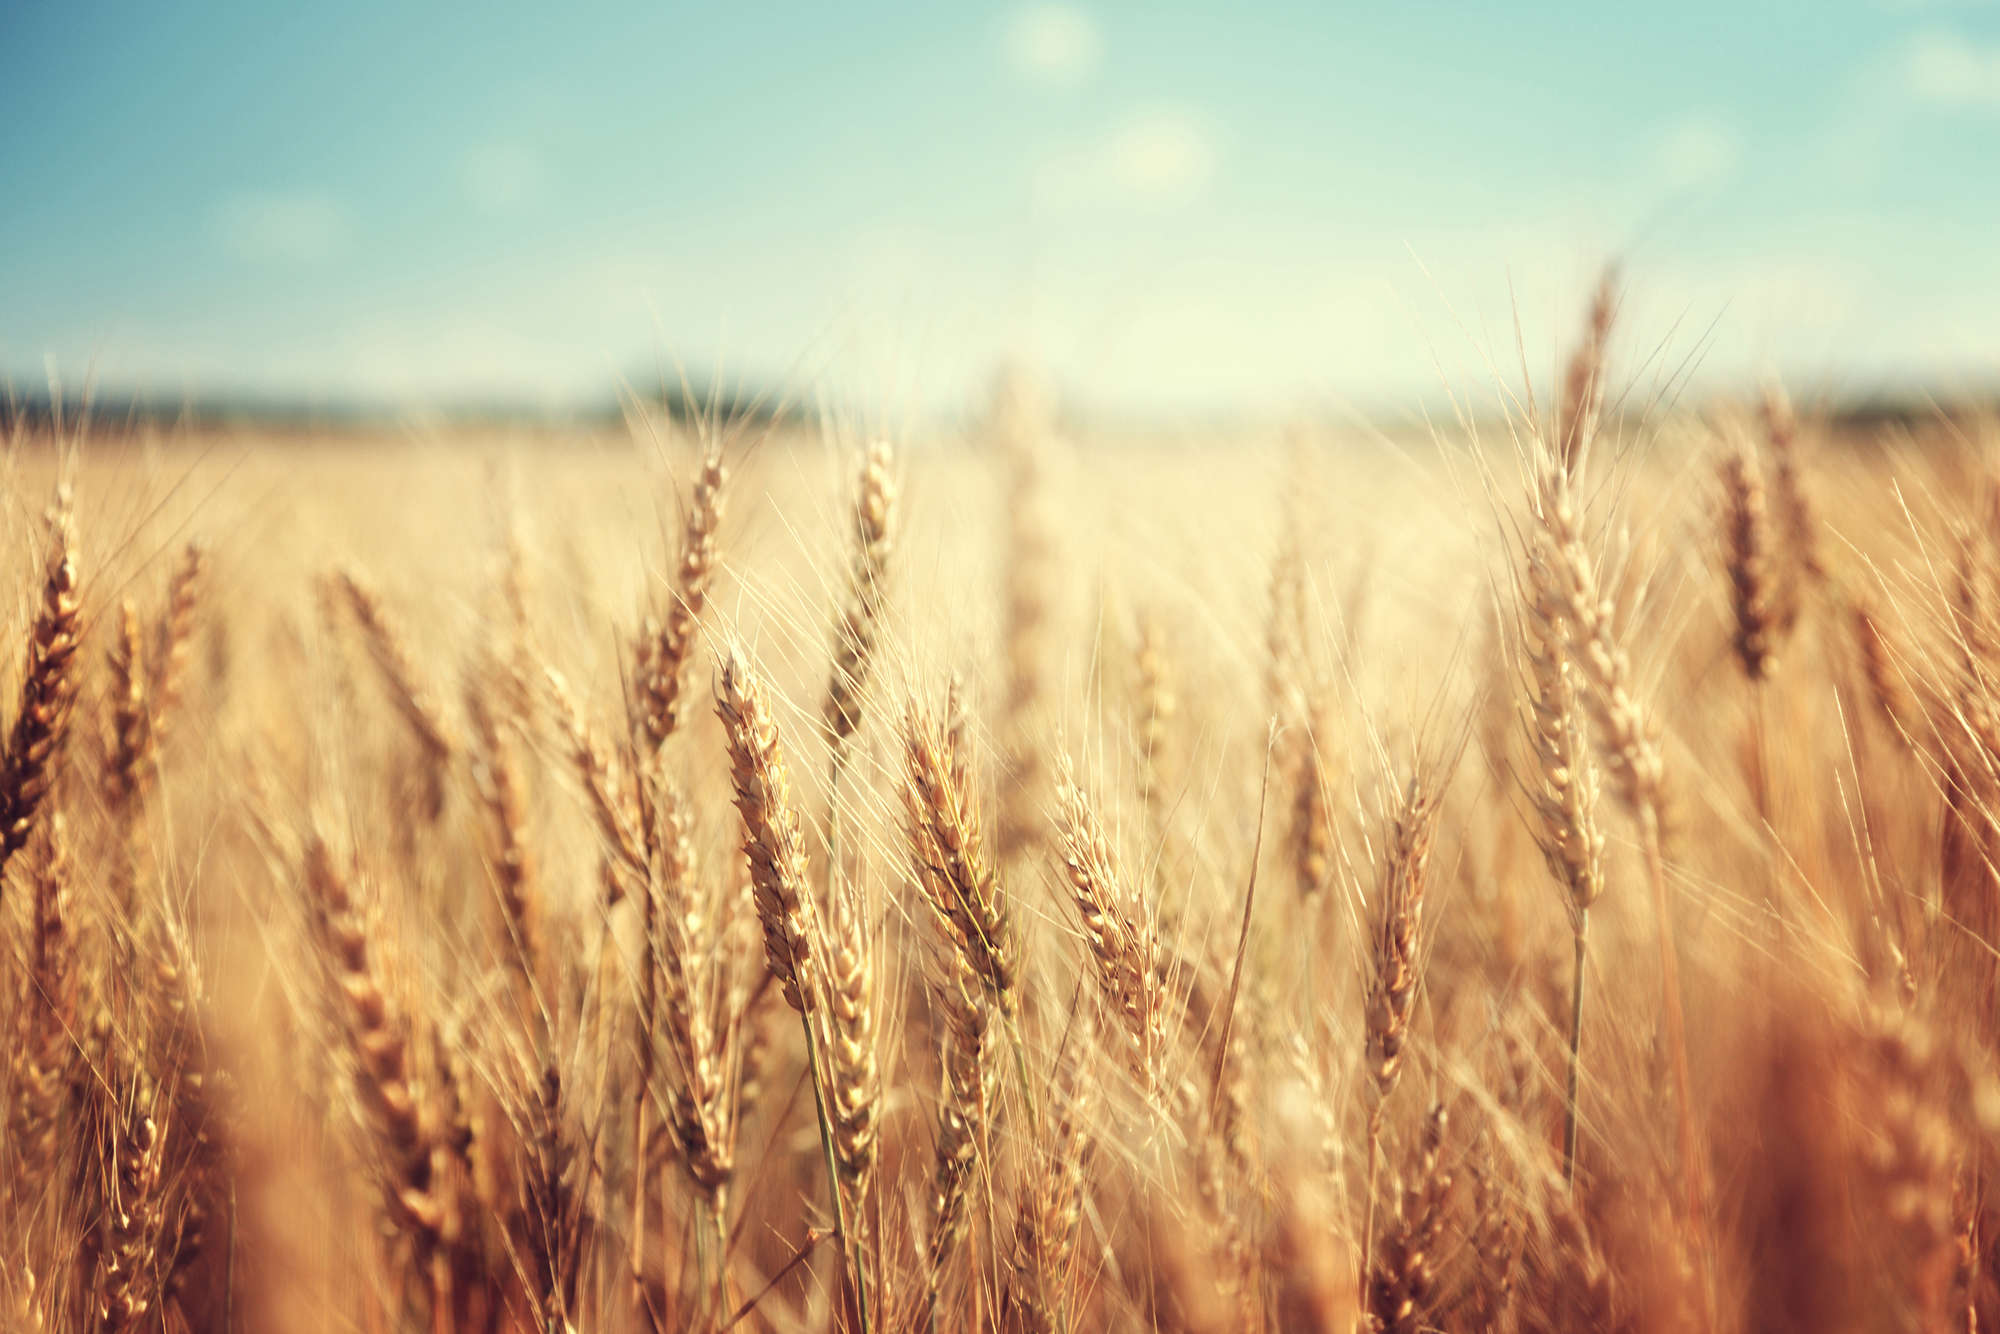             Plants mural wheat field on textured fleece
        